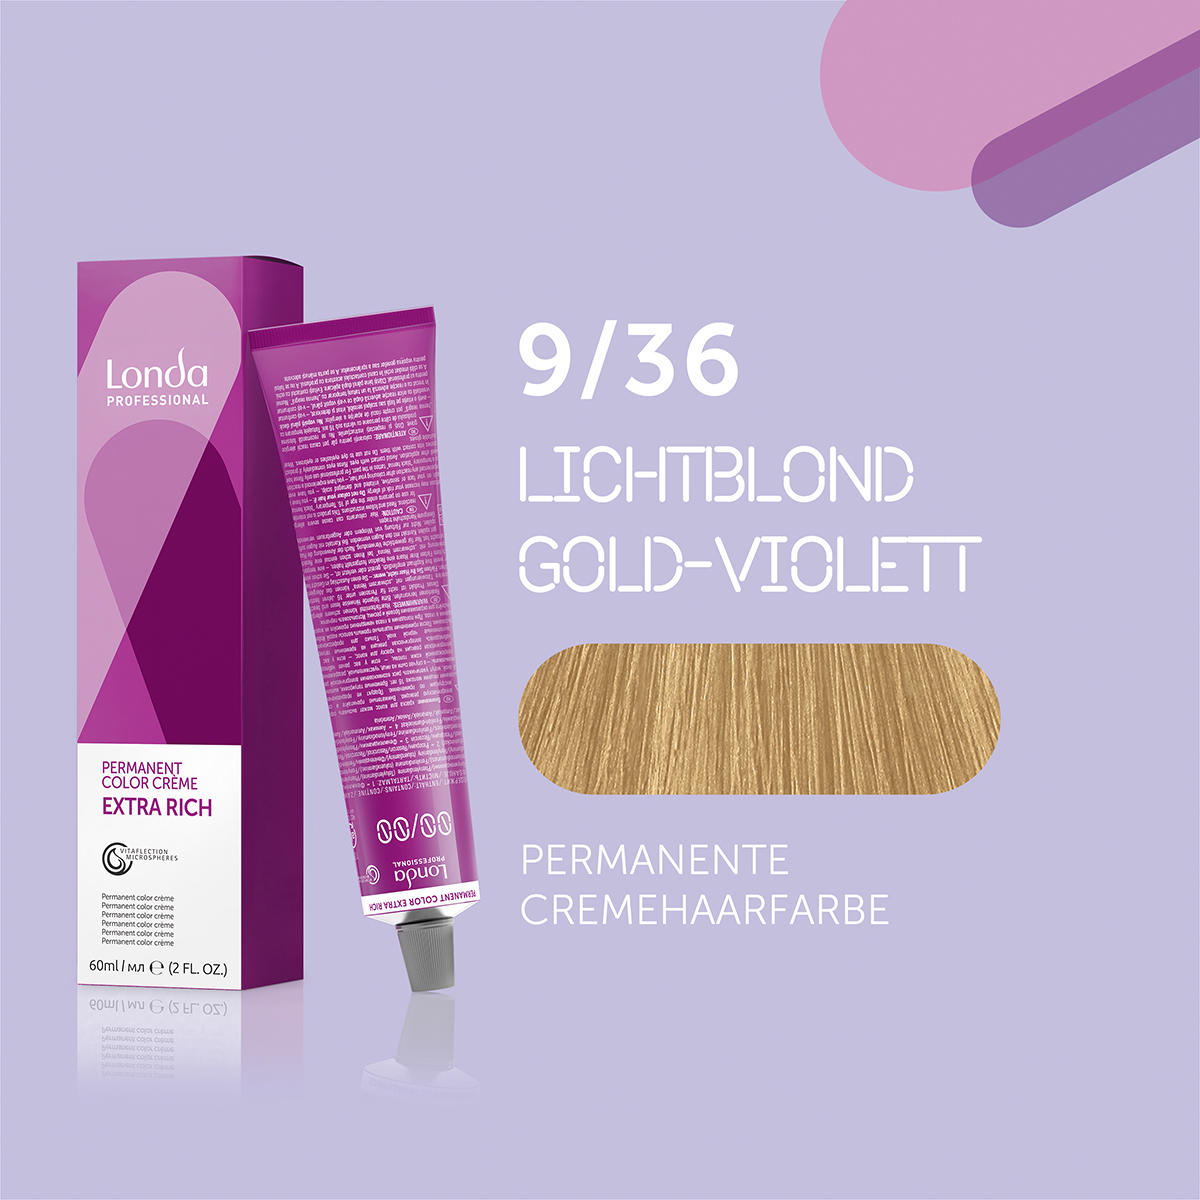 Londa Permanente Cremehaarfarbe Extra Rich 9/36 Lichtblond Gold Violett, Tube 60 ml